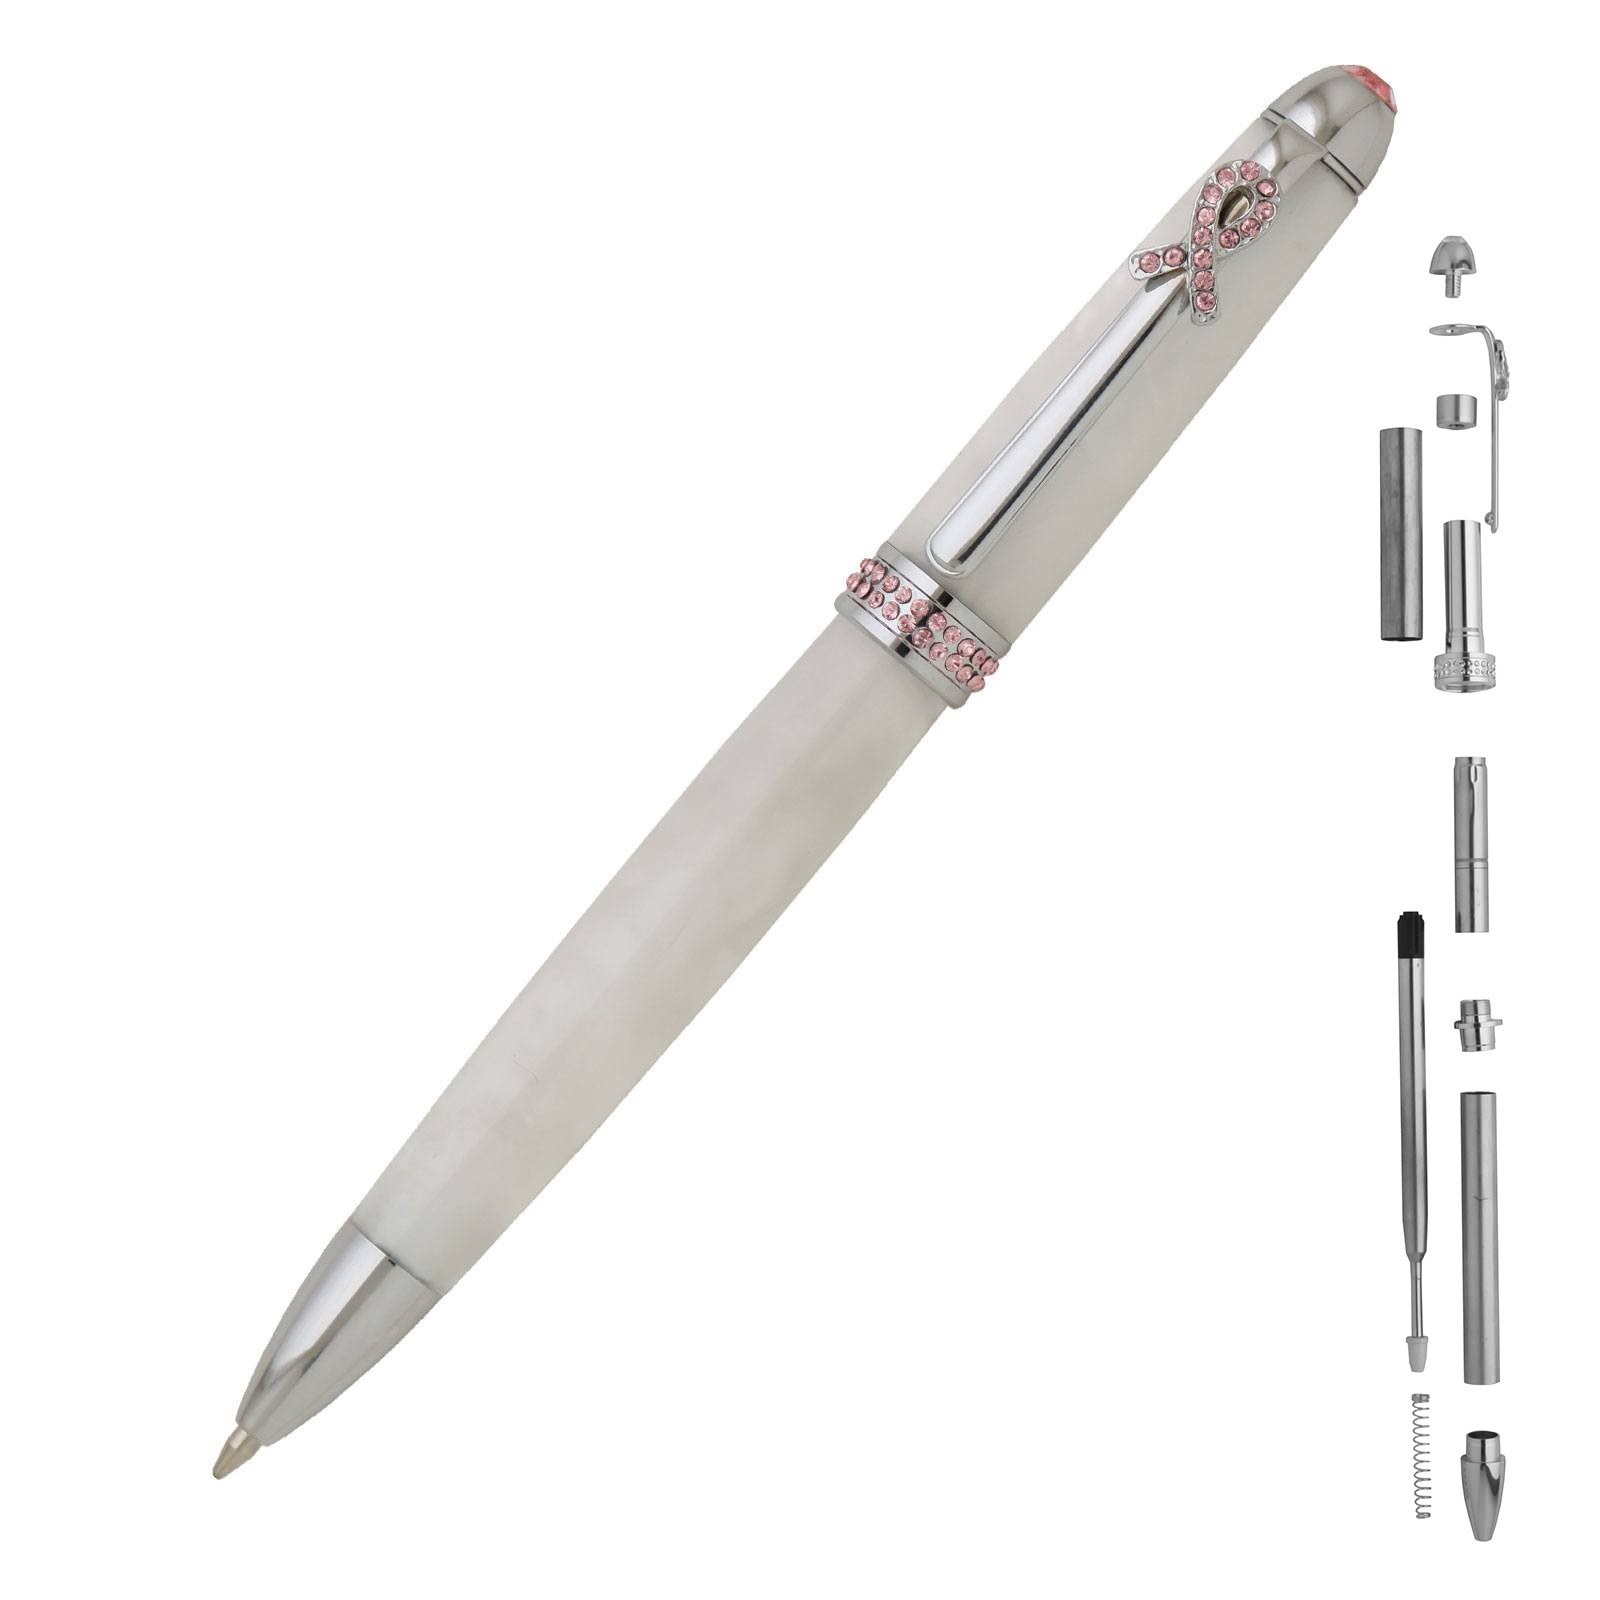 4 in 1 Multi-Function Chrome Pen Kit at Penn State Industries